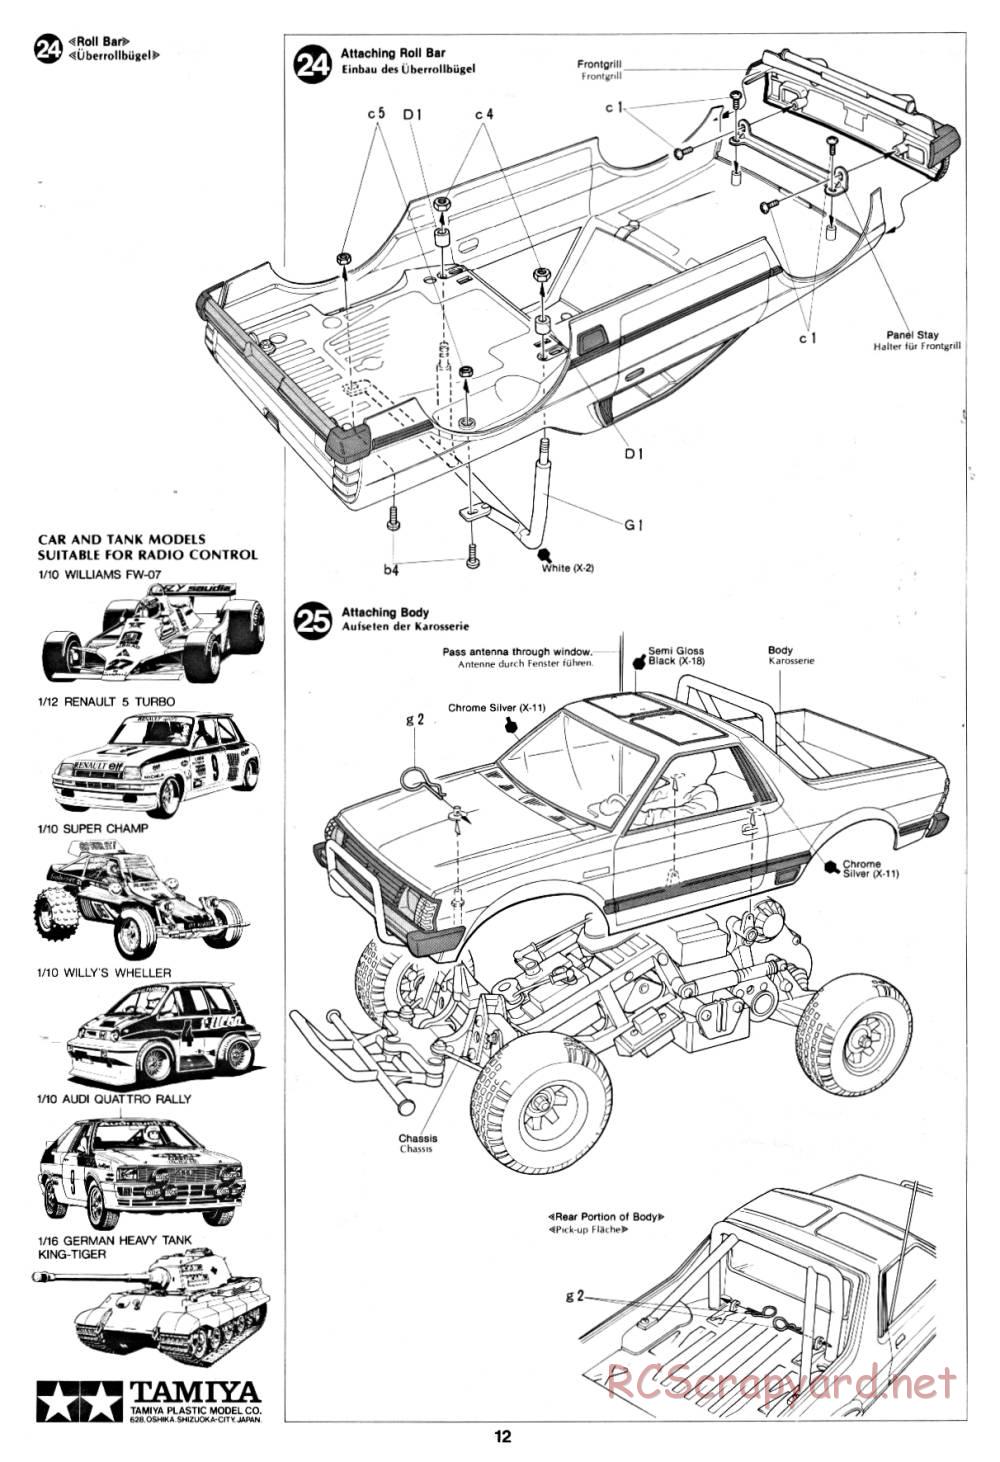 Tamiya - Subaru Brat - 58038 - Manual - Page 12